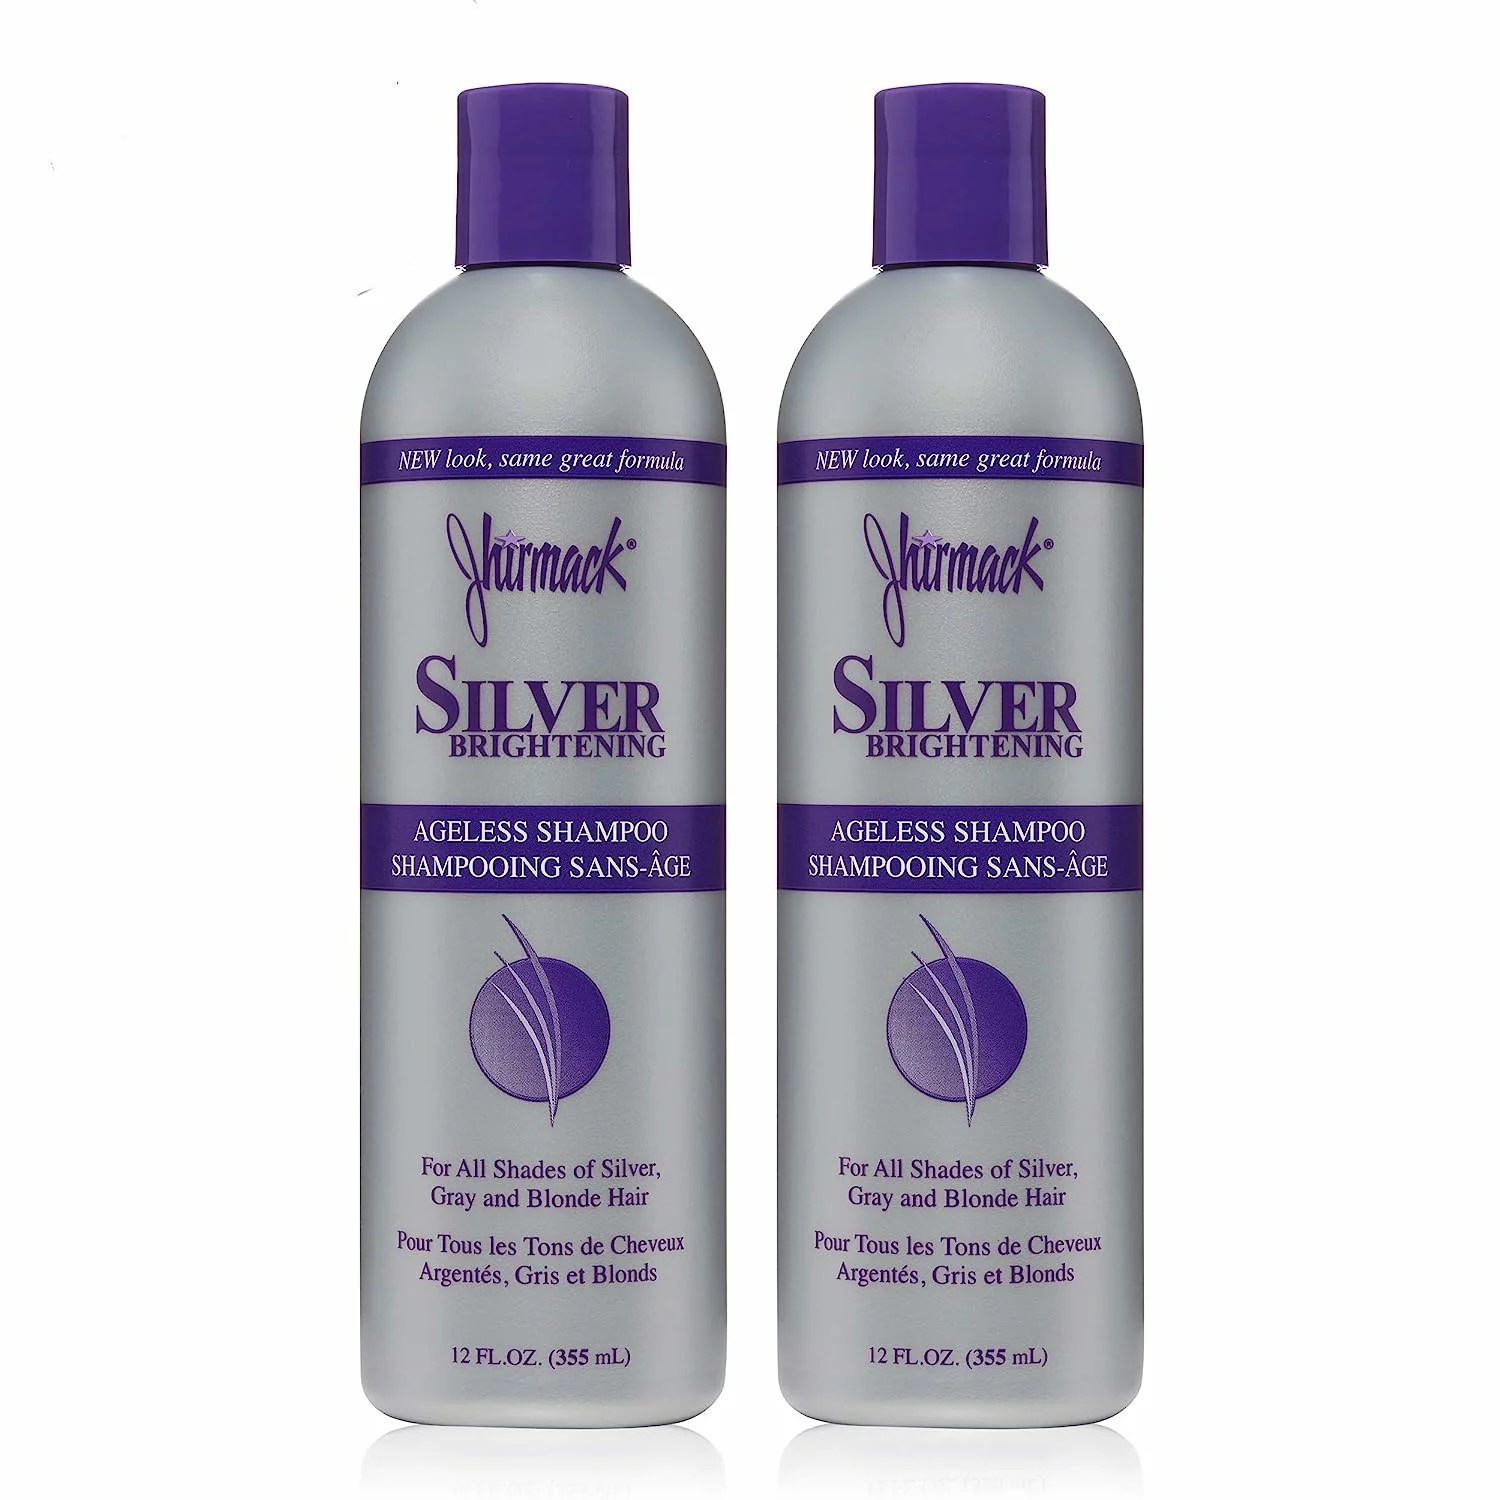 jhirmack shampoo